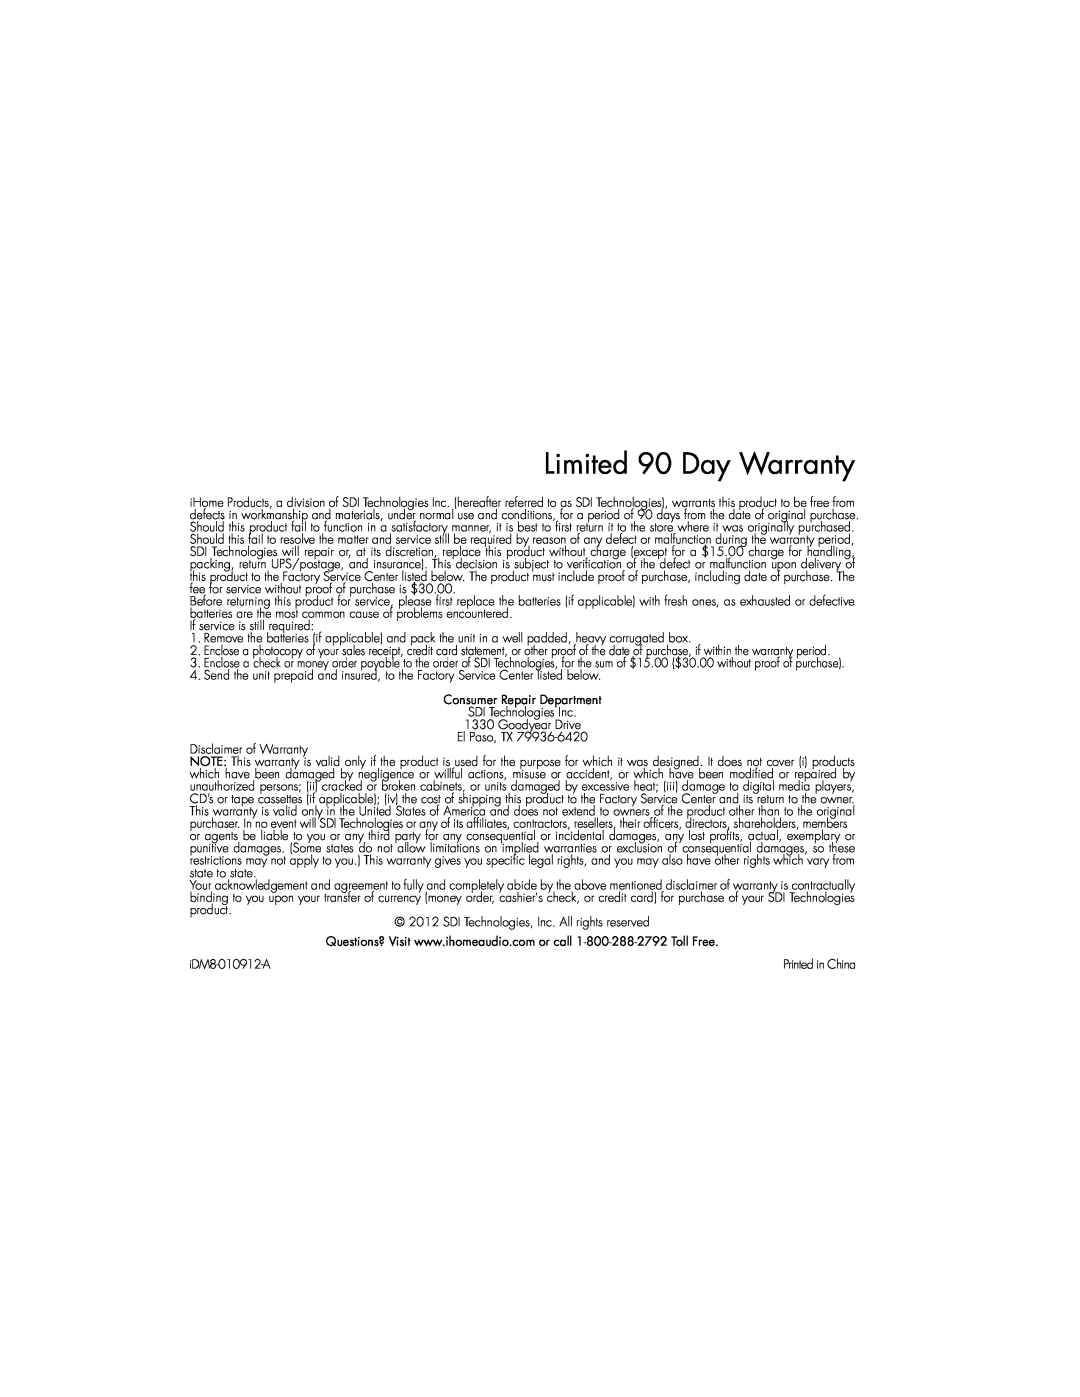 iHome iDM8 instruction manual Limited 90 Day Warranty 